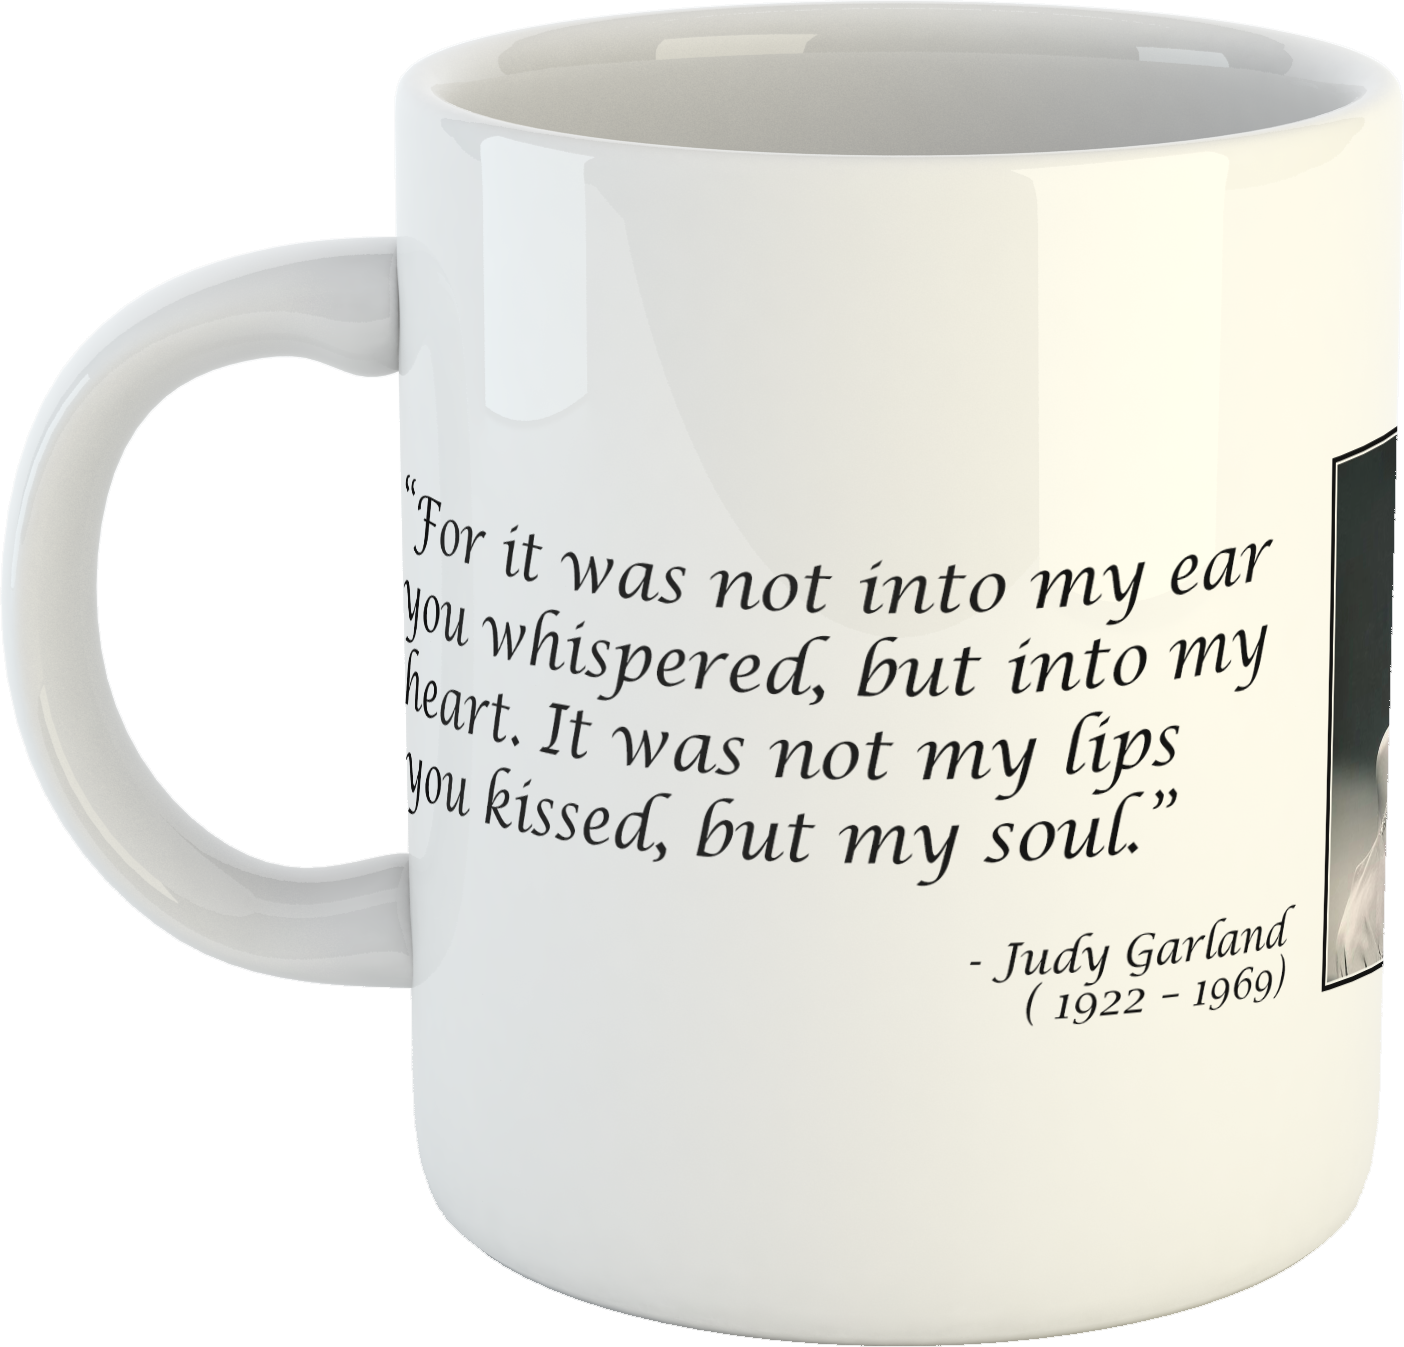 Judy Garland  Quotation Mug